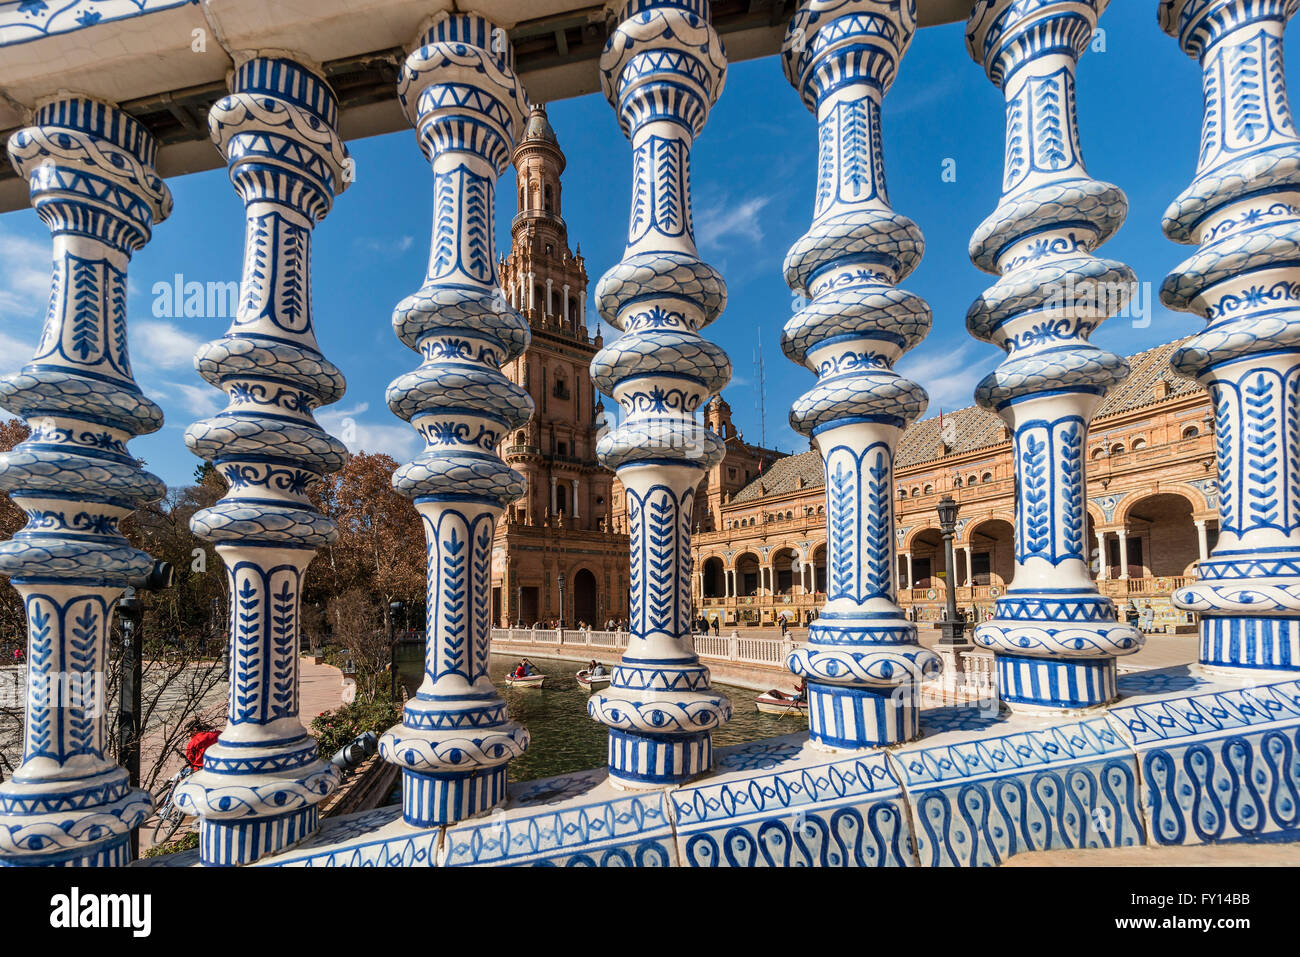 Placa de Espana, ceramic decor columns, spanish square, Seville, Andalusia, Spain, Stock Photo